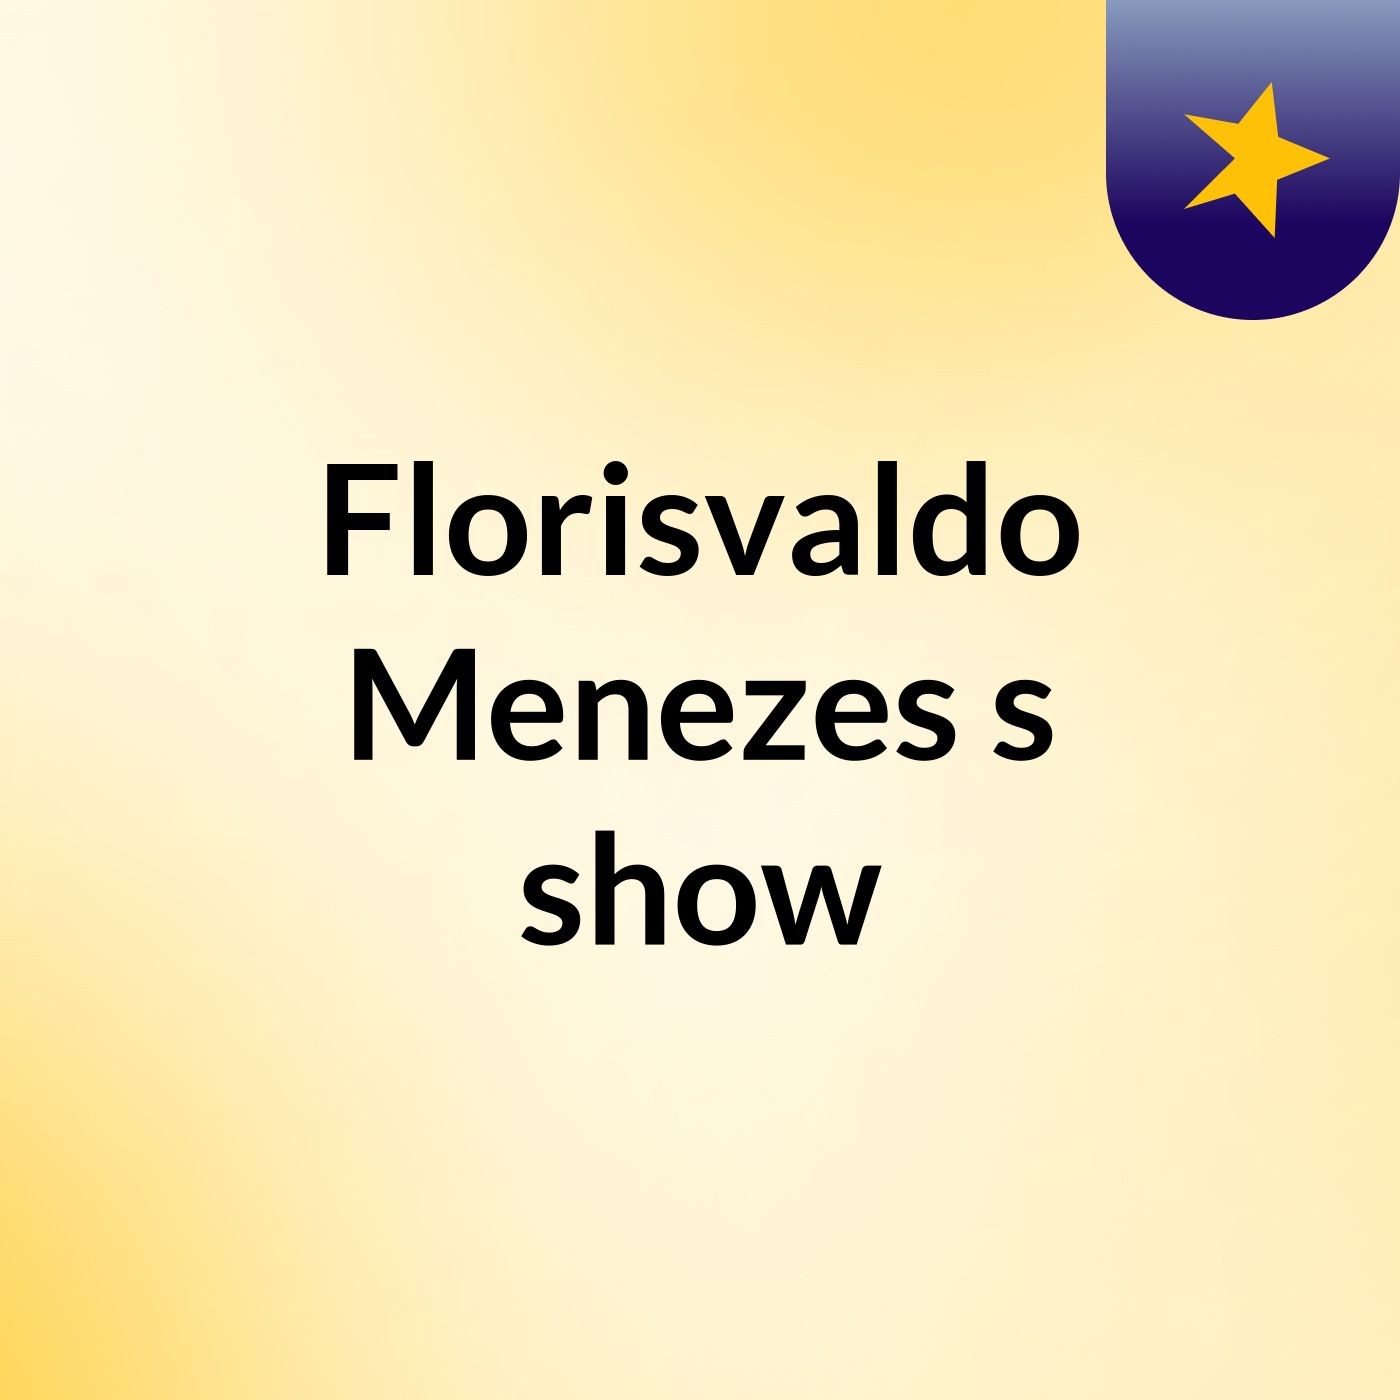 Florisvaldo Menezes's show